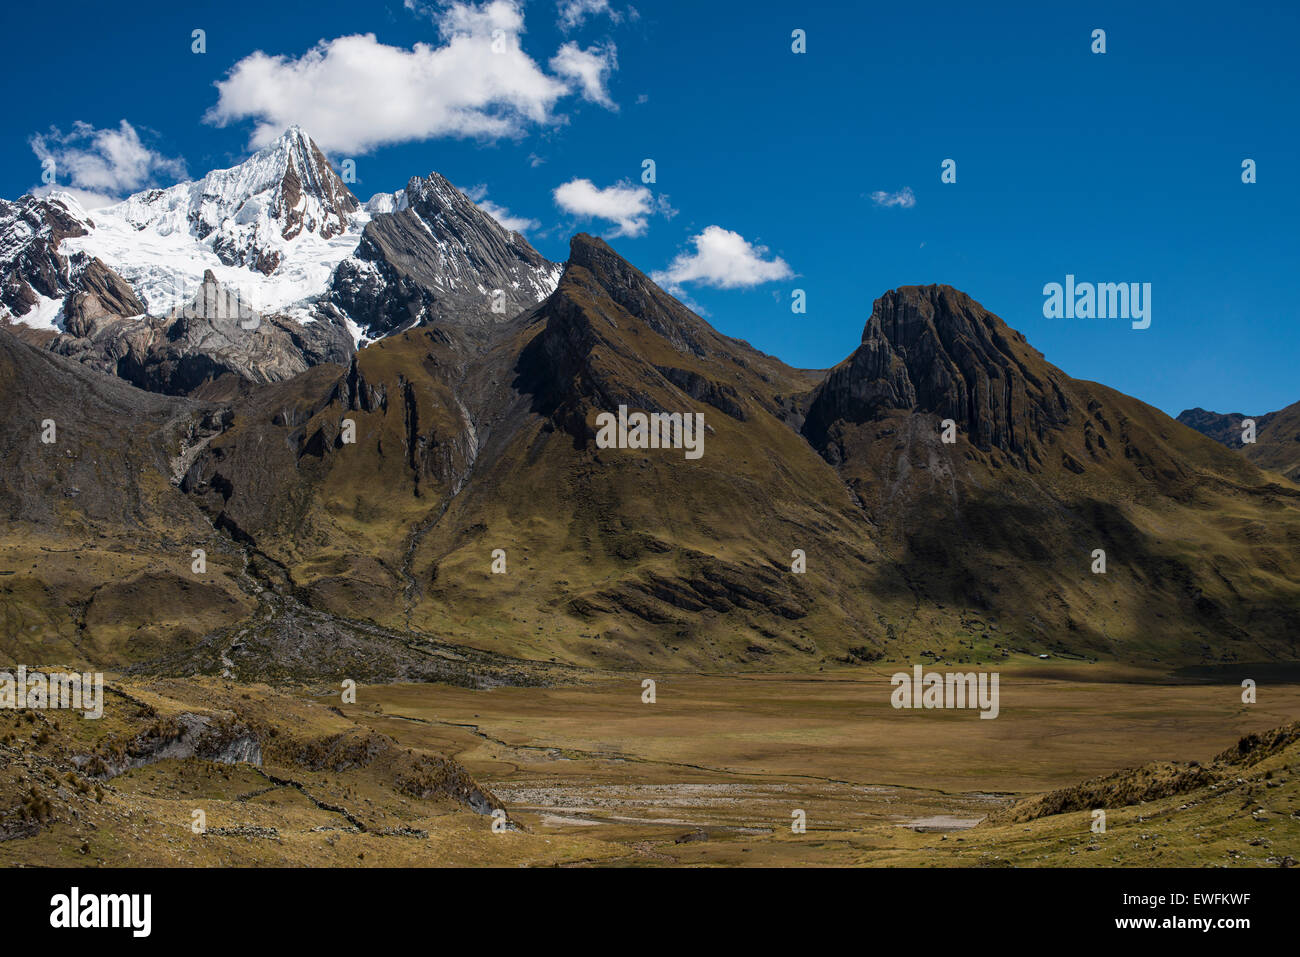 Snow-capped mountains and rocks, Cordillera Huayhuash mountain range, Andes, northern Peru, Peru Stock Photo